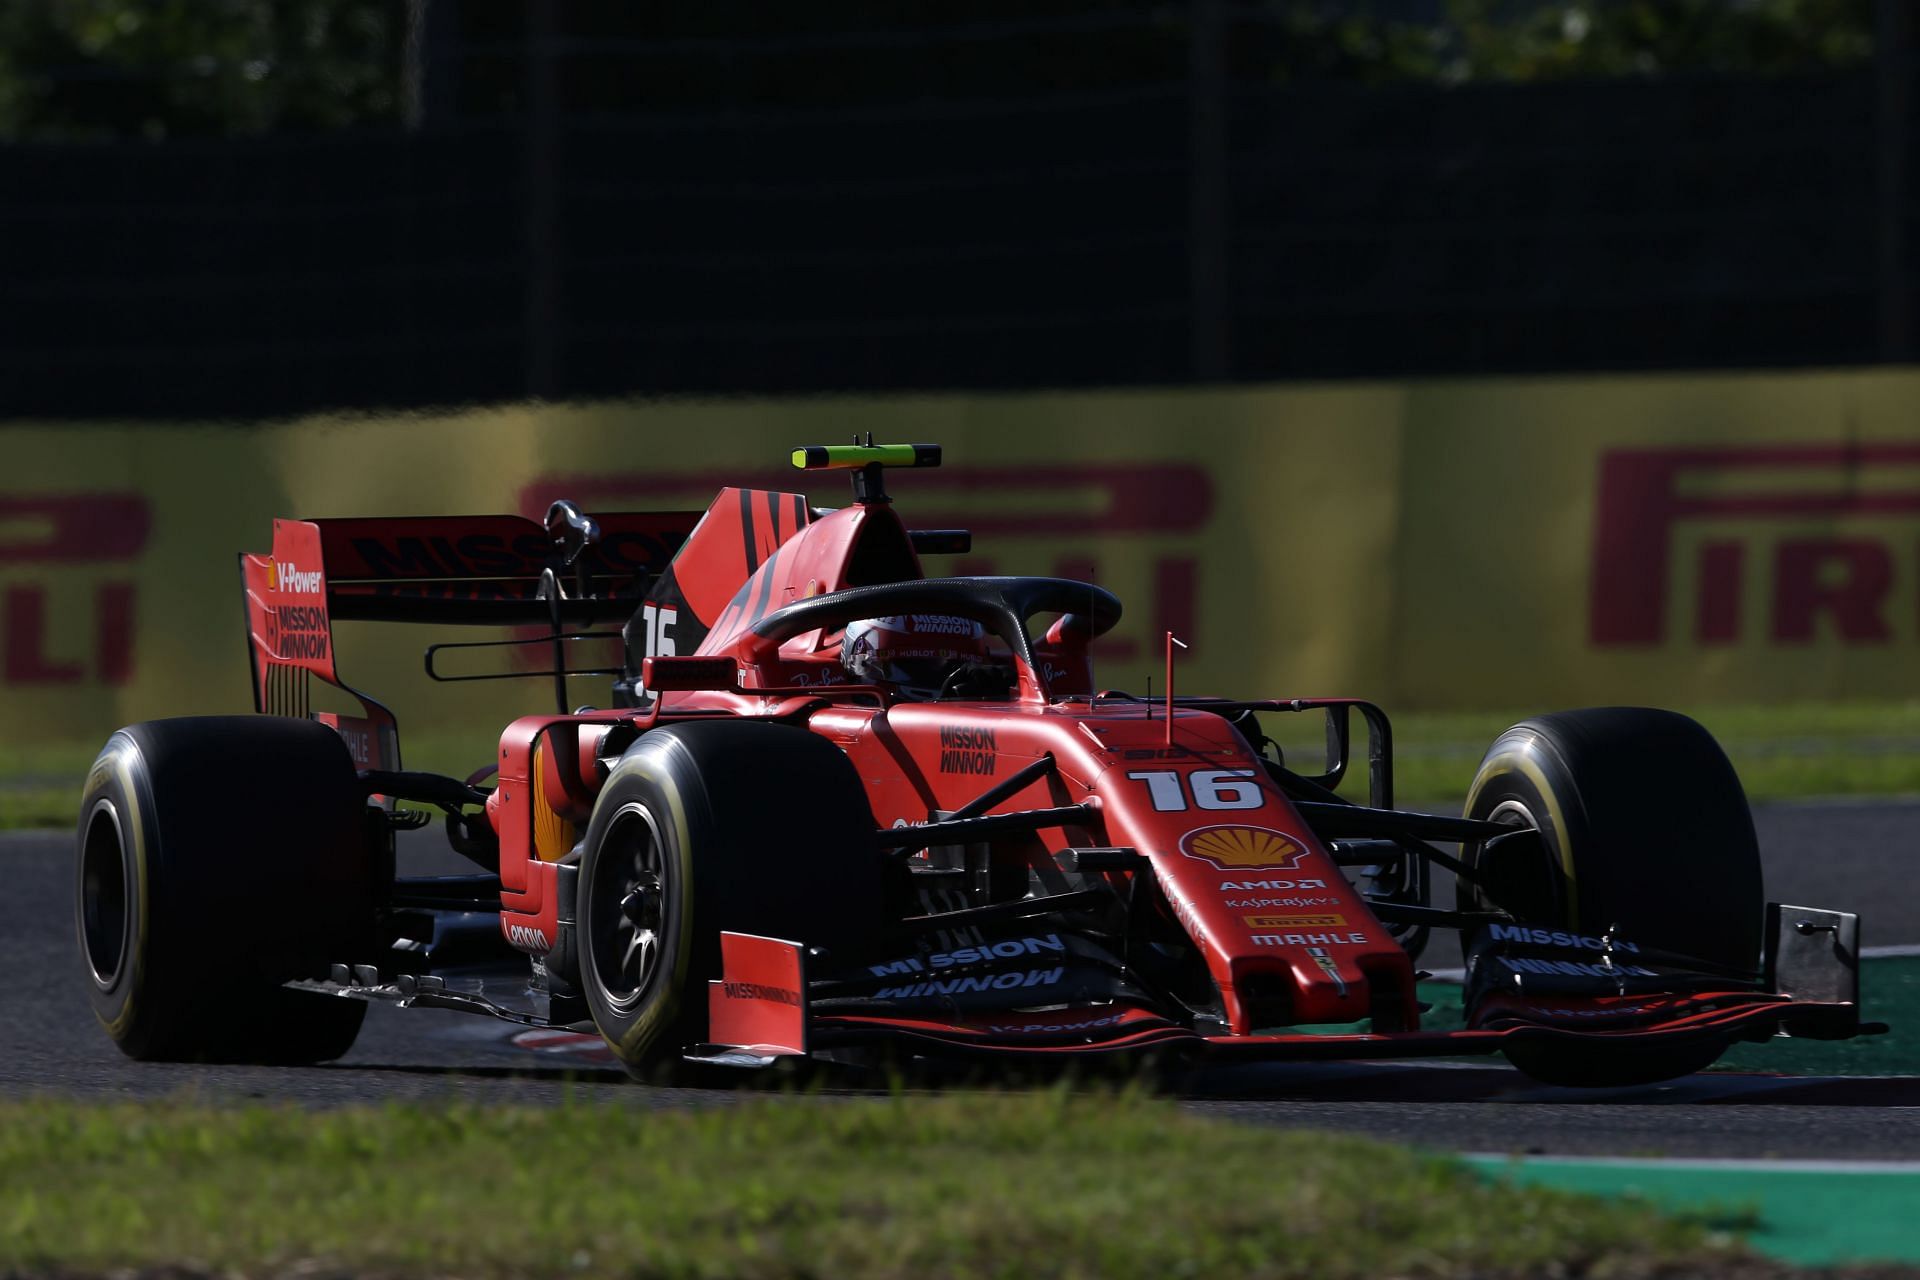 Charles Leclerc (#16) driving the Ferrari SF19 at the 2019 Japanese Grand Prix